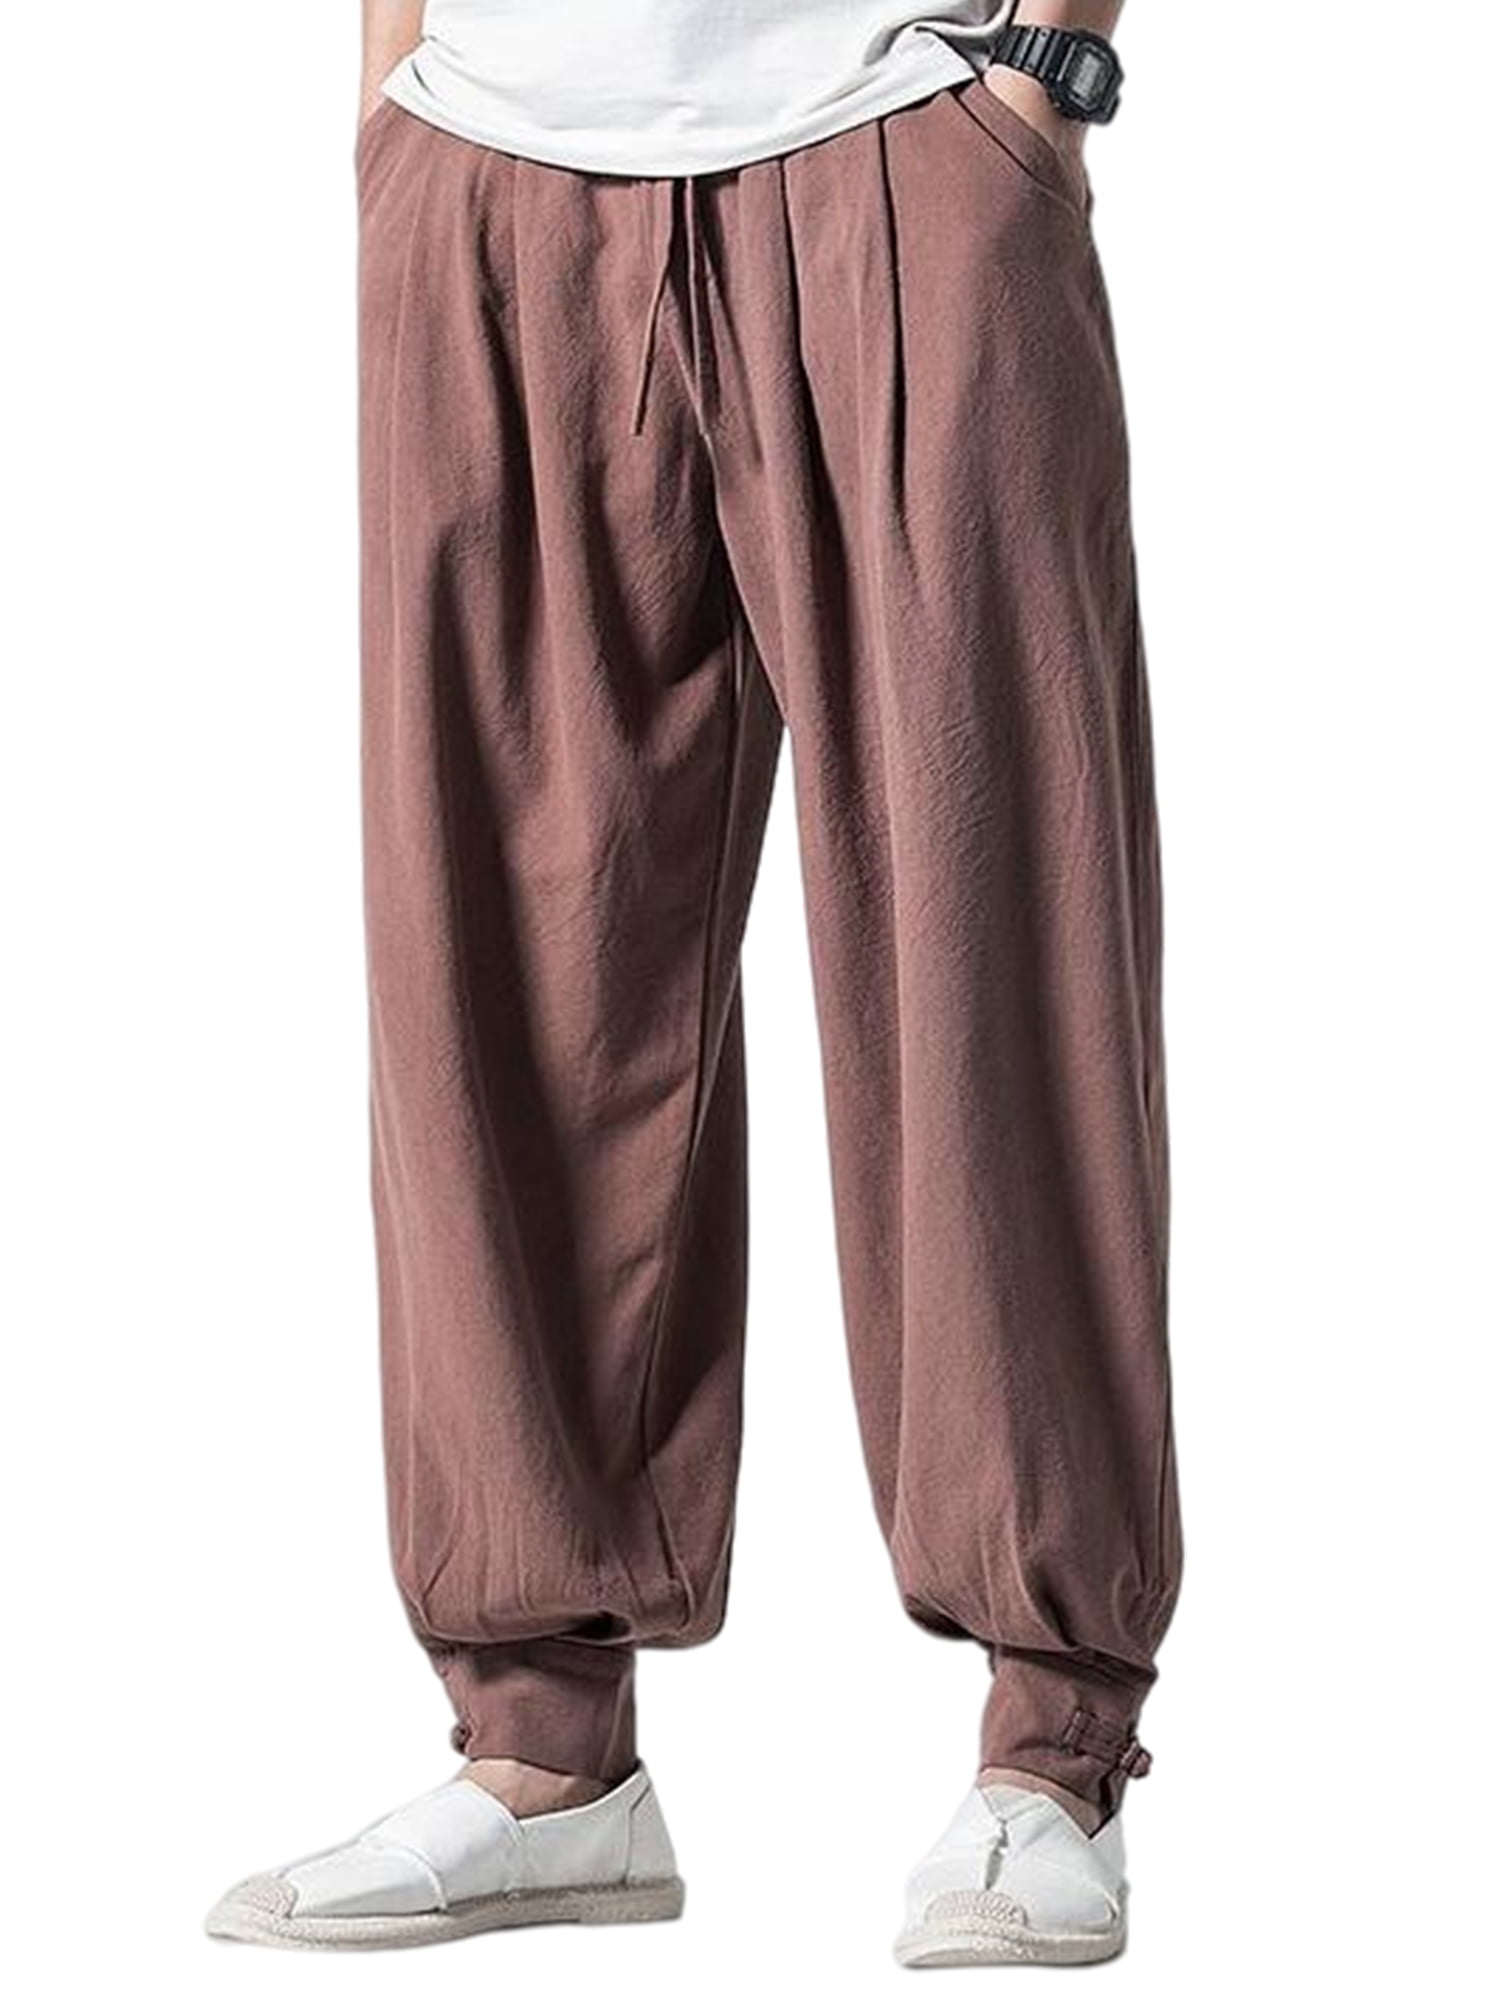 WAWAYA Men Harem Trousers Gym Trainning Elastic Waist Athletic Printed Sweatpants Pants Trousers